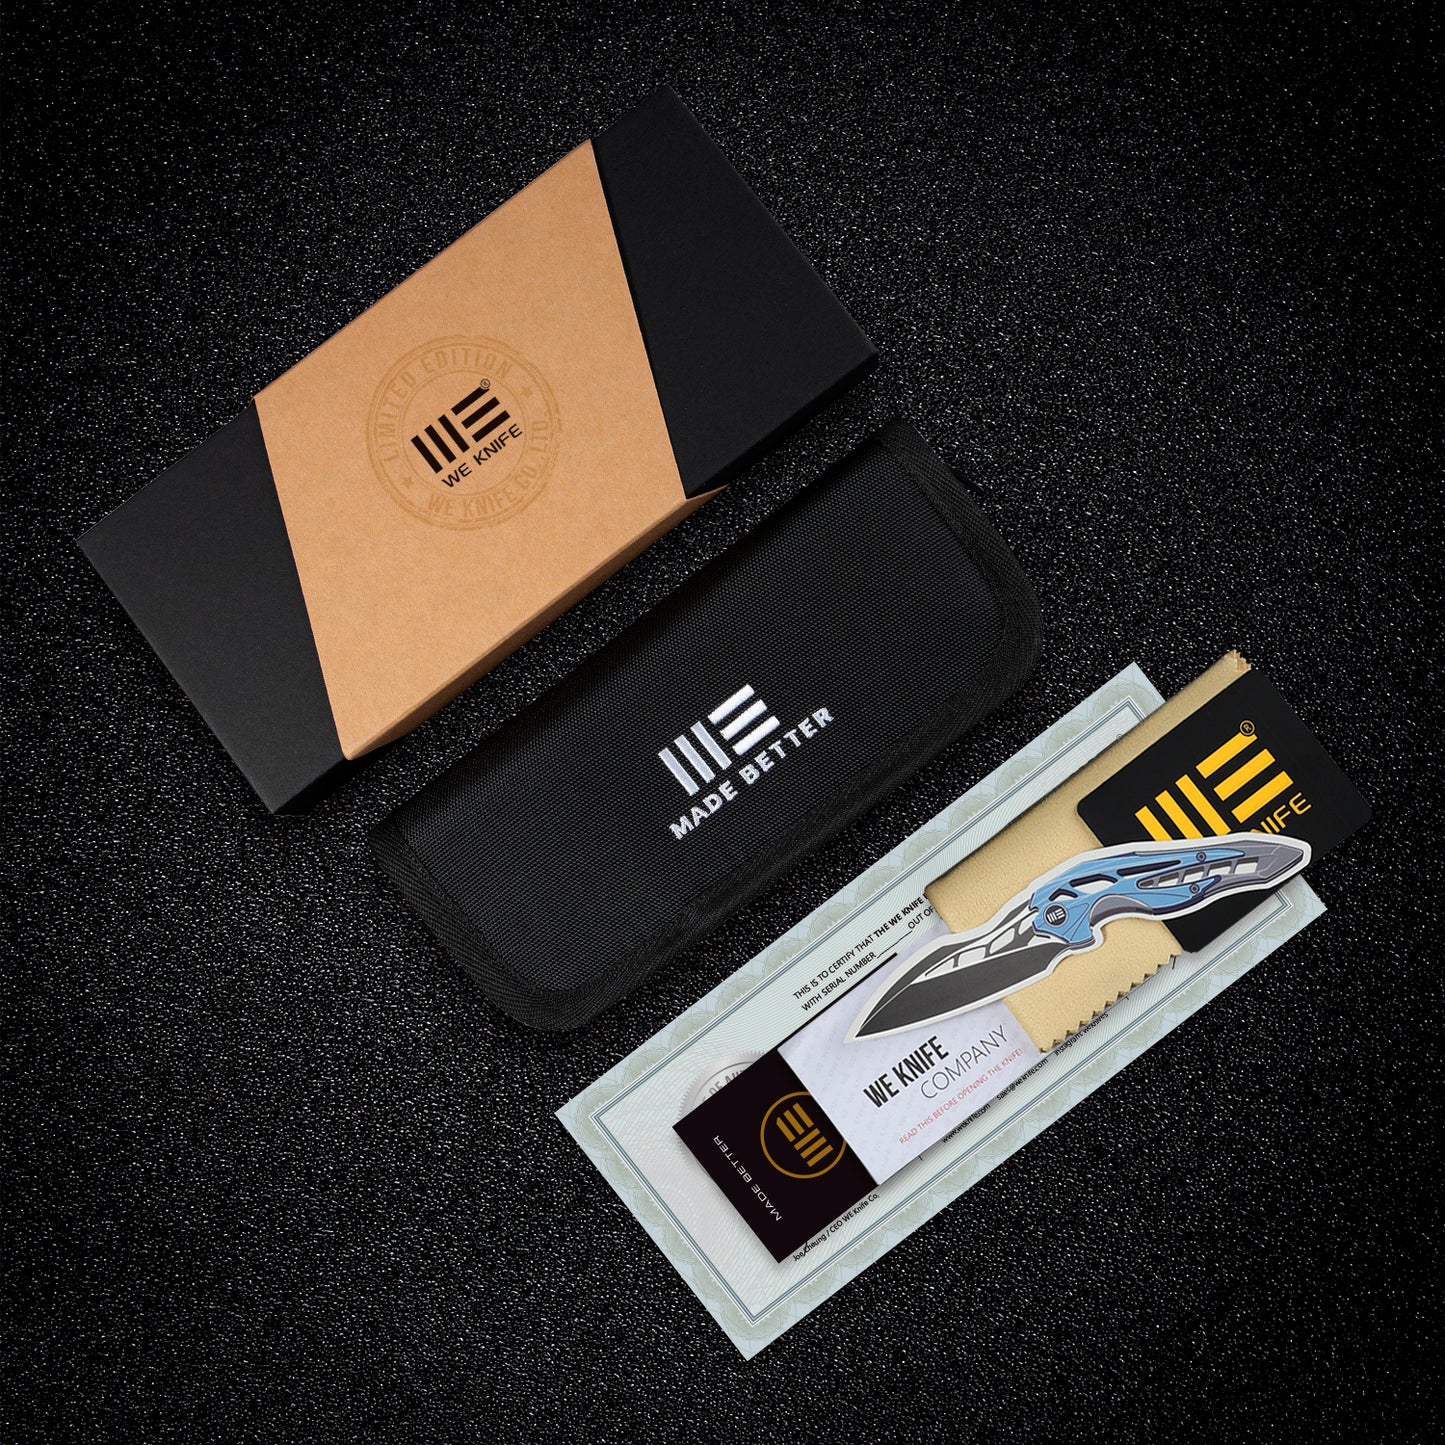 WE Nefaris Limited Edition 3.48" CPM 20CV Black Copper Foil Carbon Fiber Titanium Folding Knife WE22040F-1